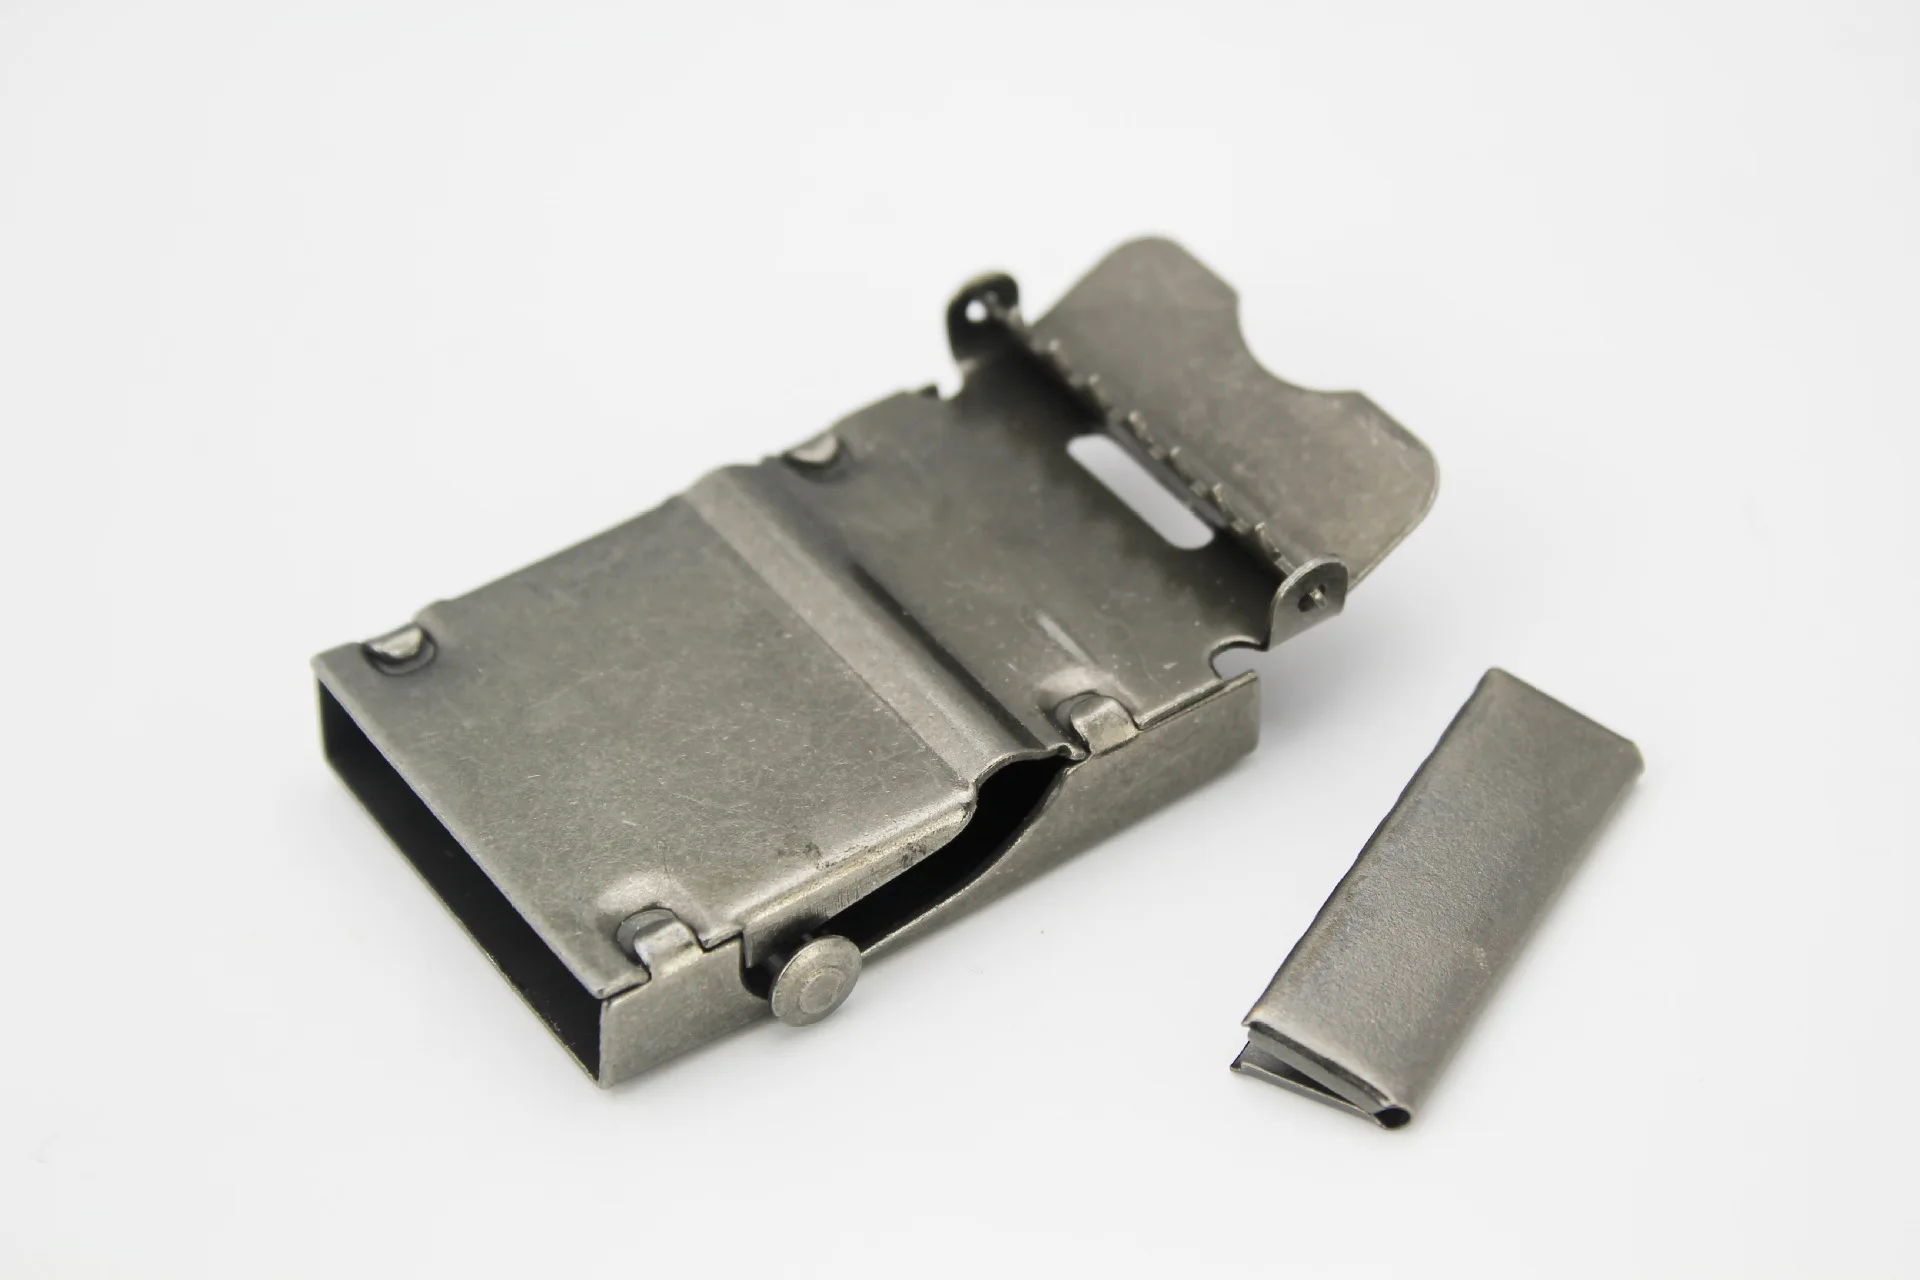 Excellent quality unique design cheap price metal belt buckle hardware accessories adjust buckle  Clips custom size